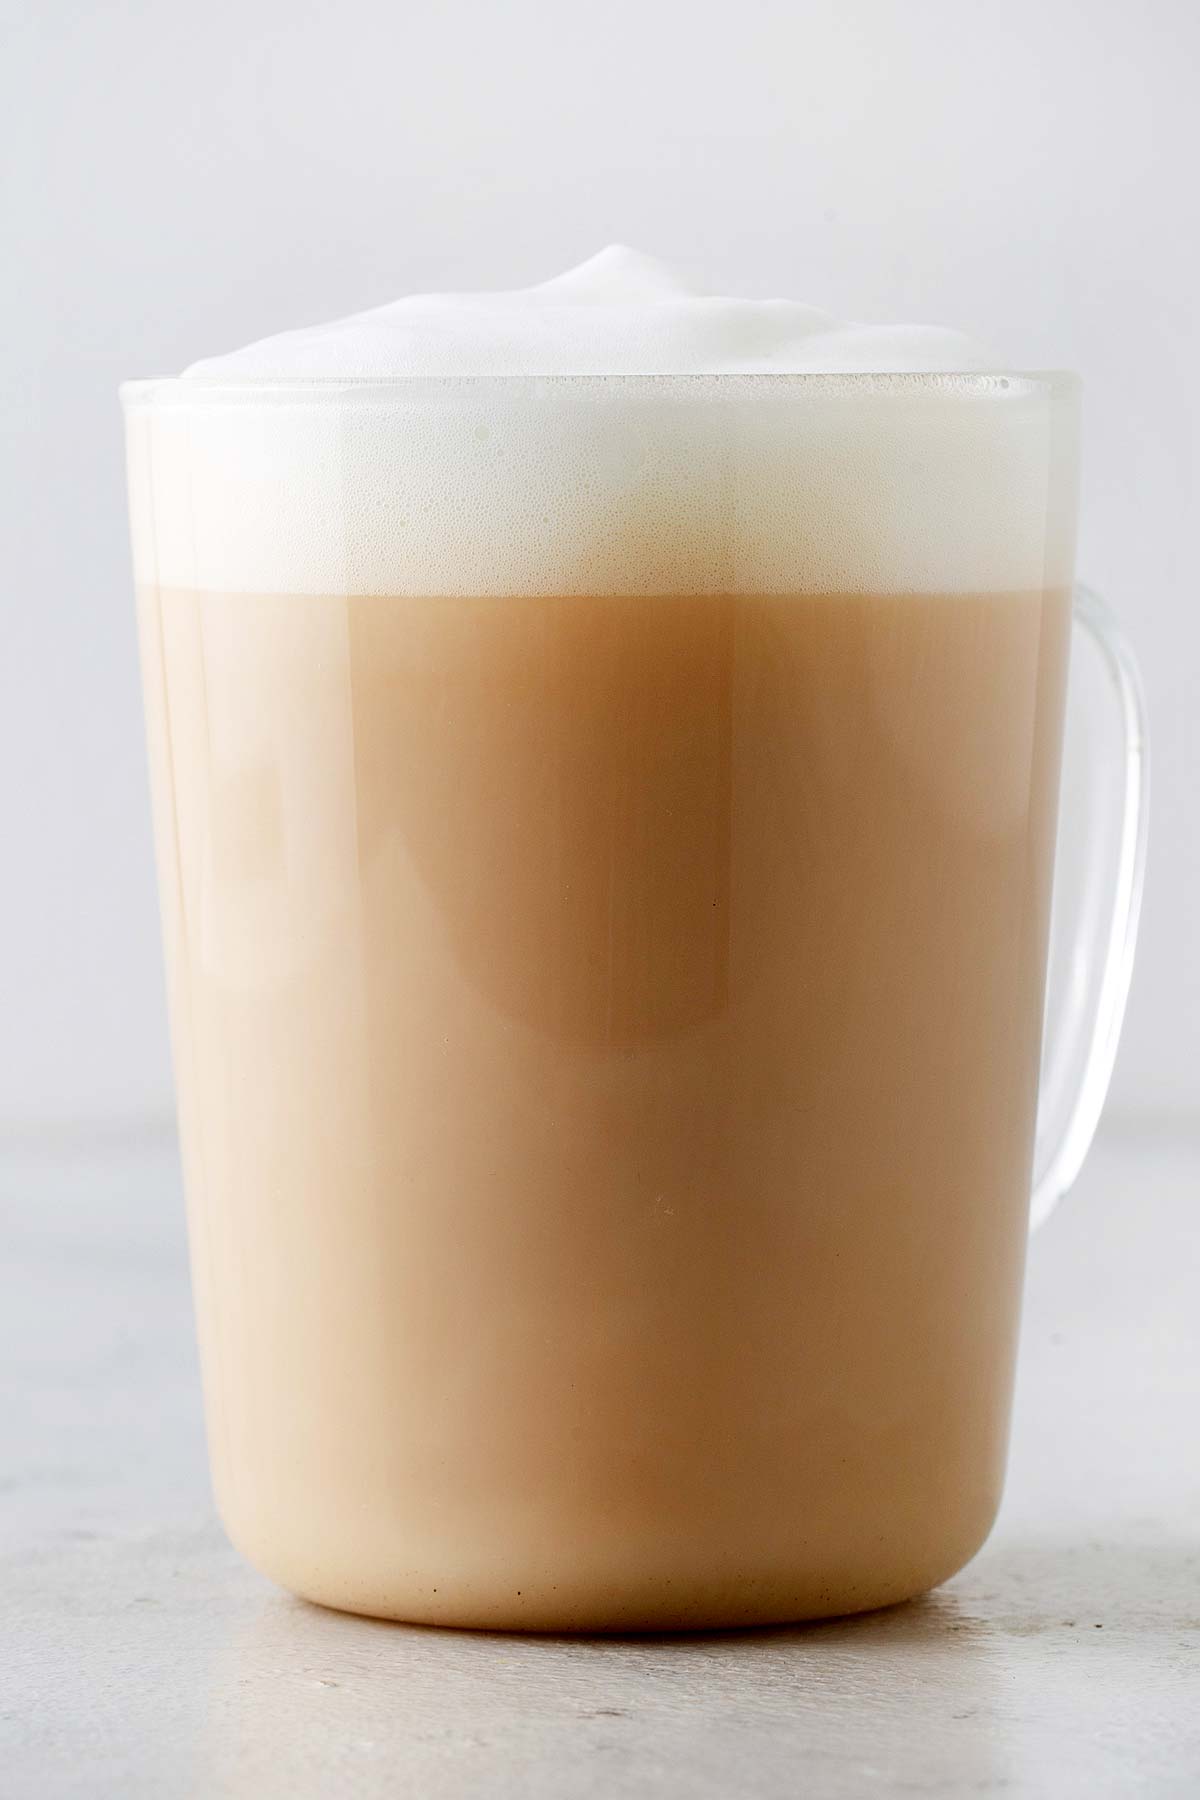 Starbucks London Fog Tea Latte Copycat in a clear mug.
